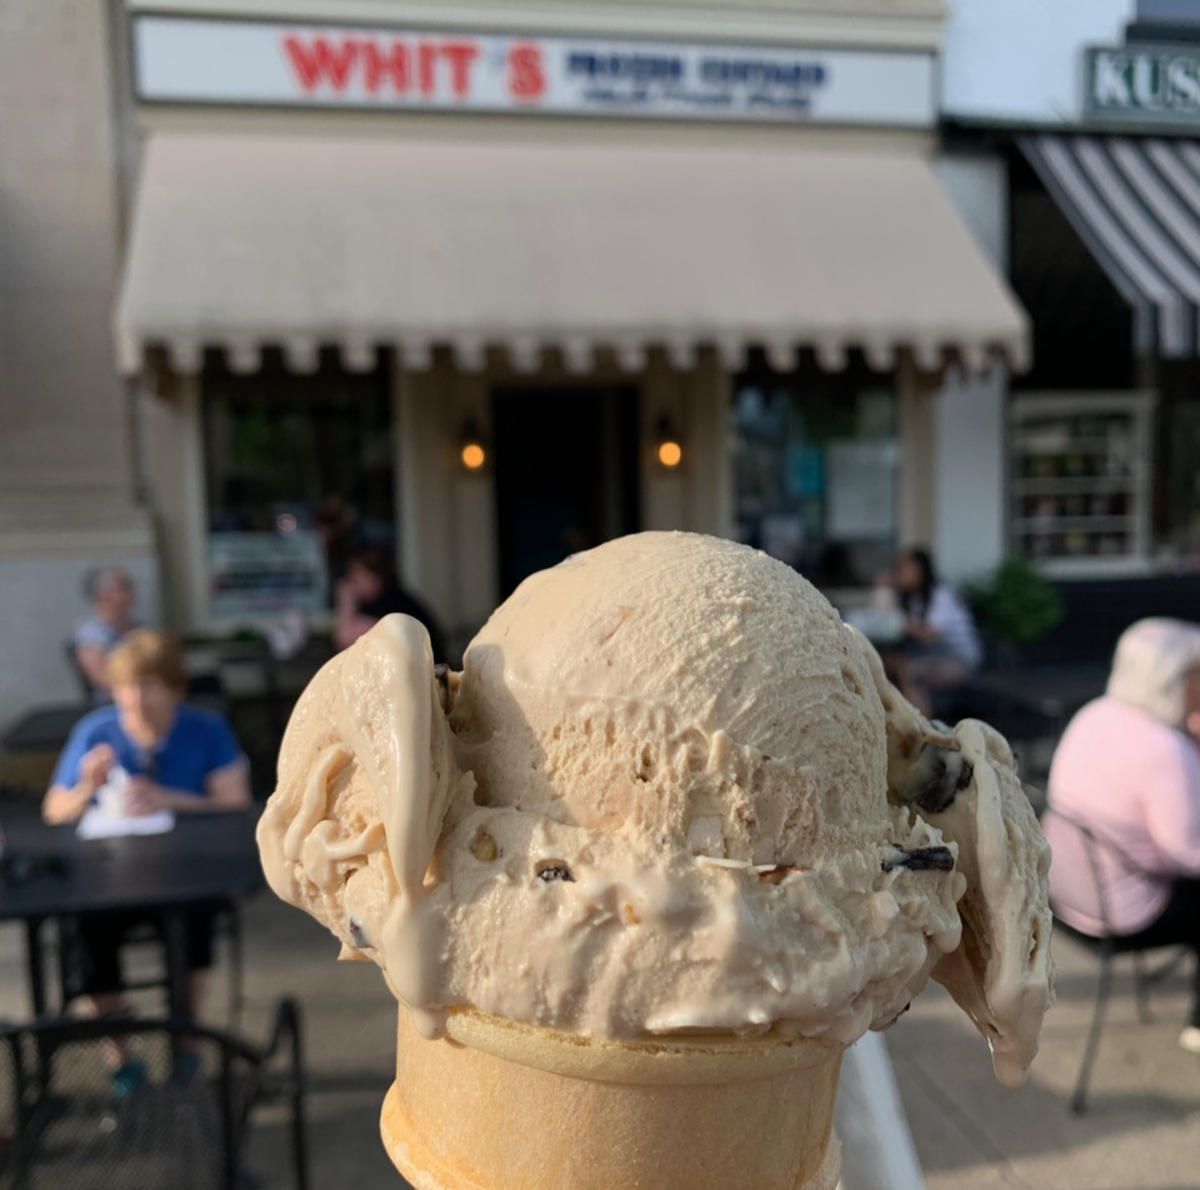 Whit's Ice Cream Cone